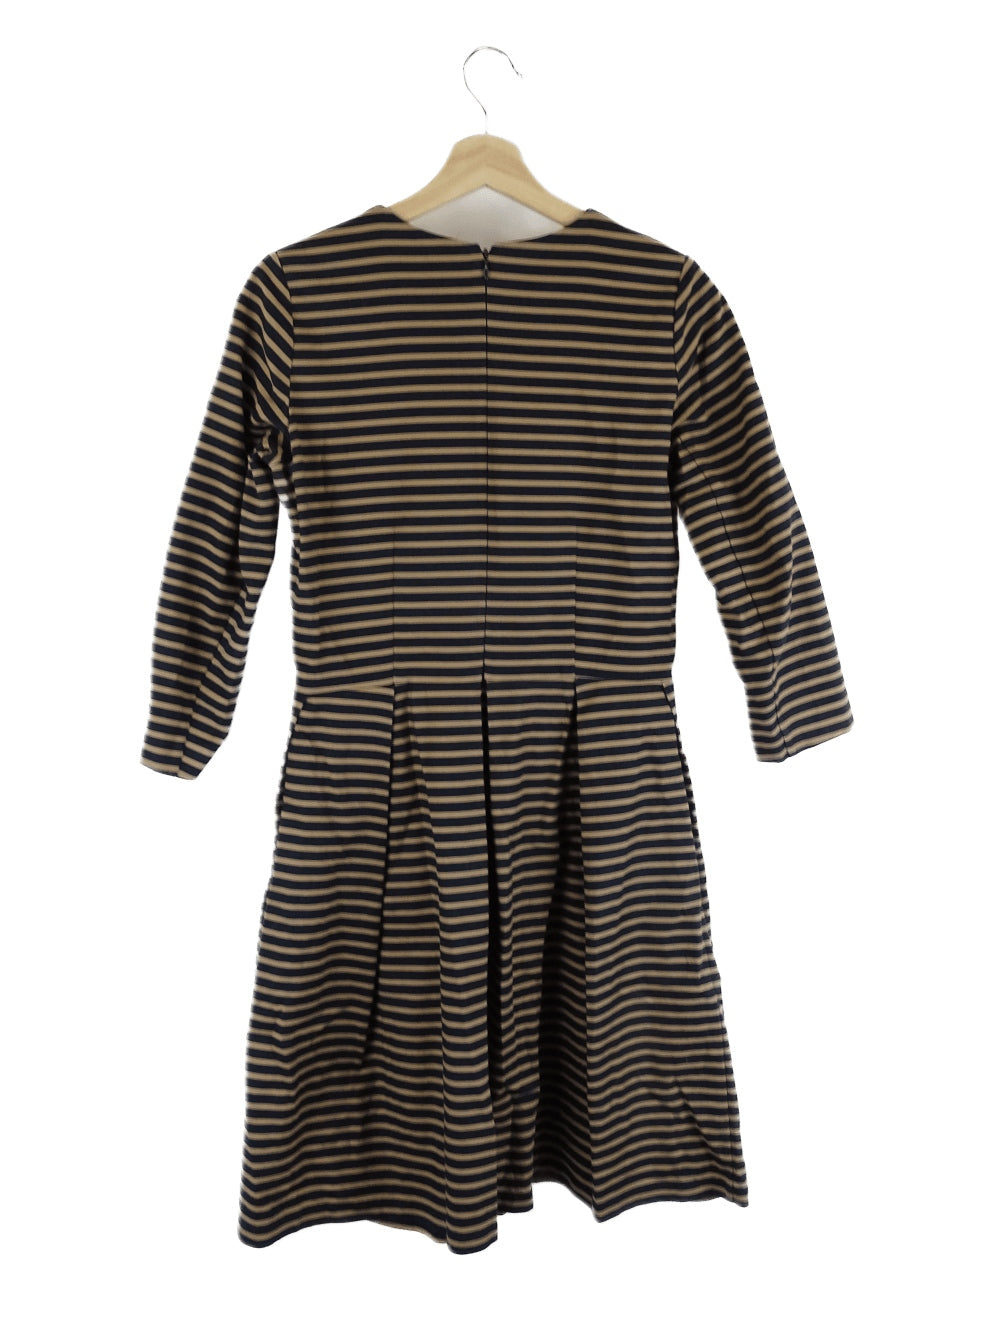 Gap Brown And Black Stripe Dress 6